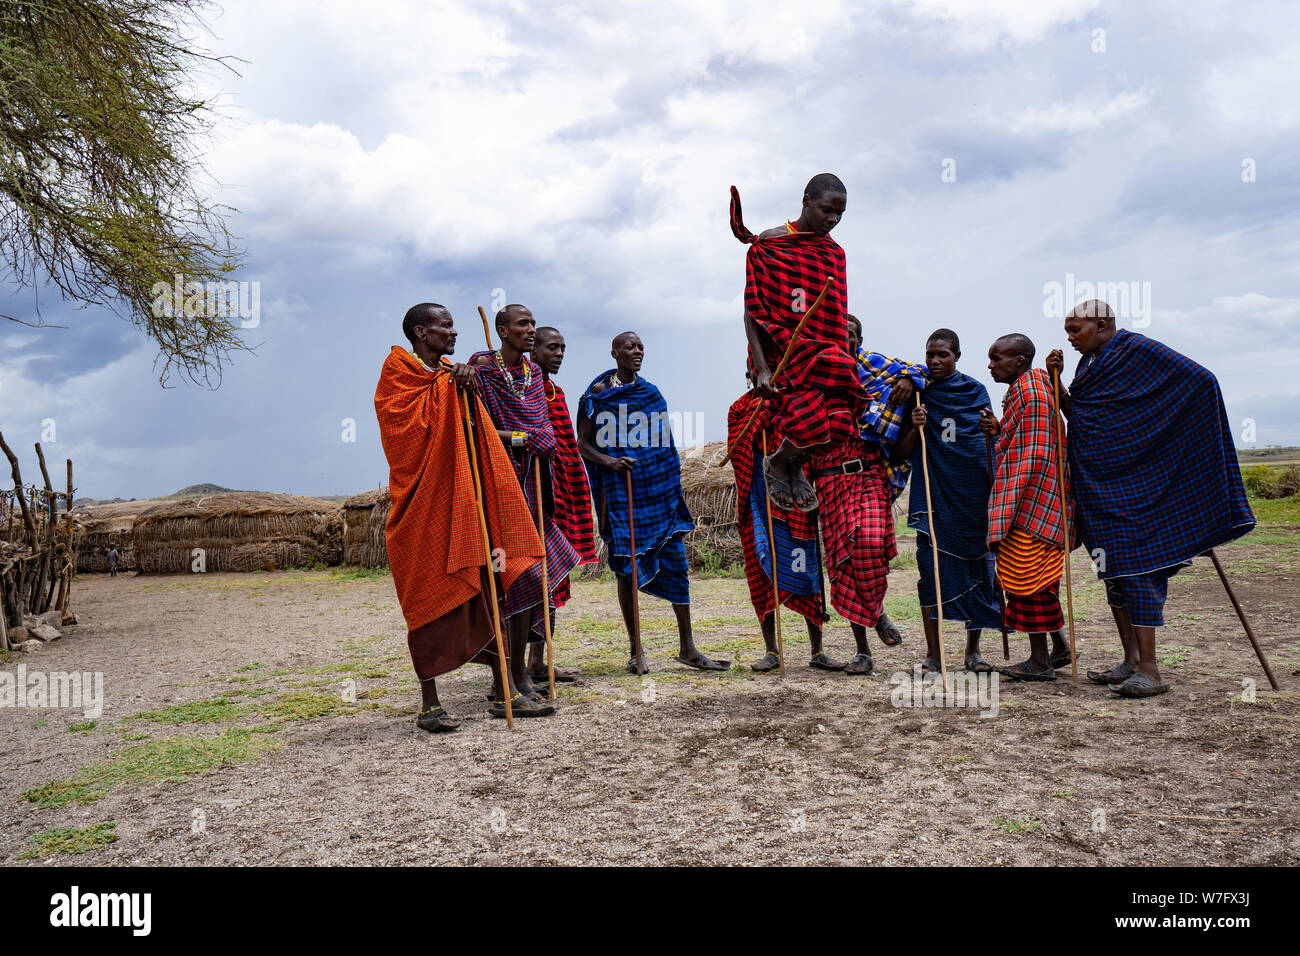 Traditional Masai Jumping Dance at a Masai Village, Tanzania, East Africa Stock Photo